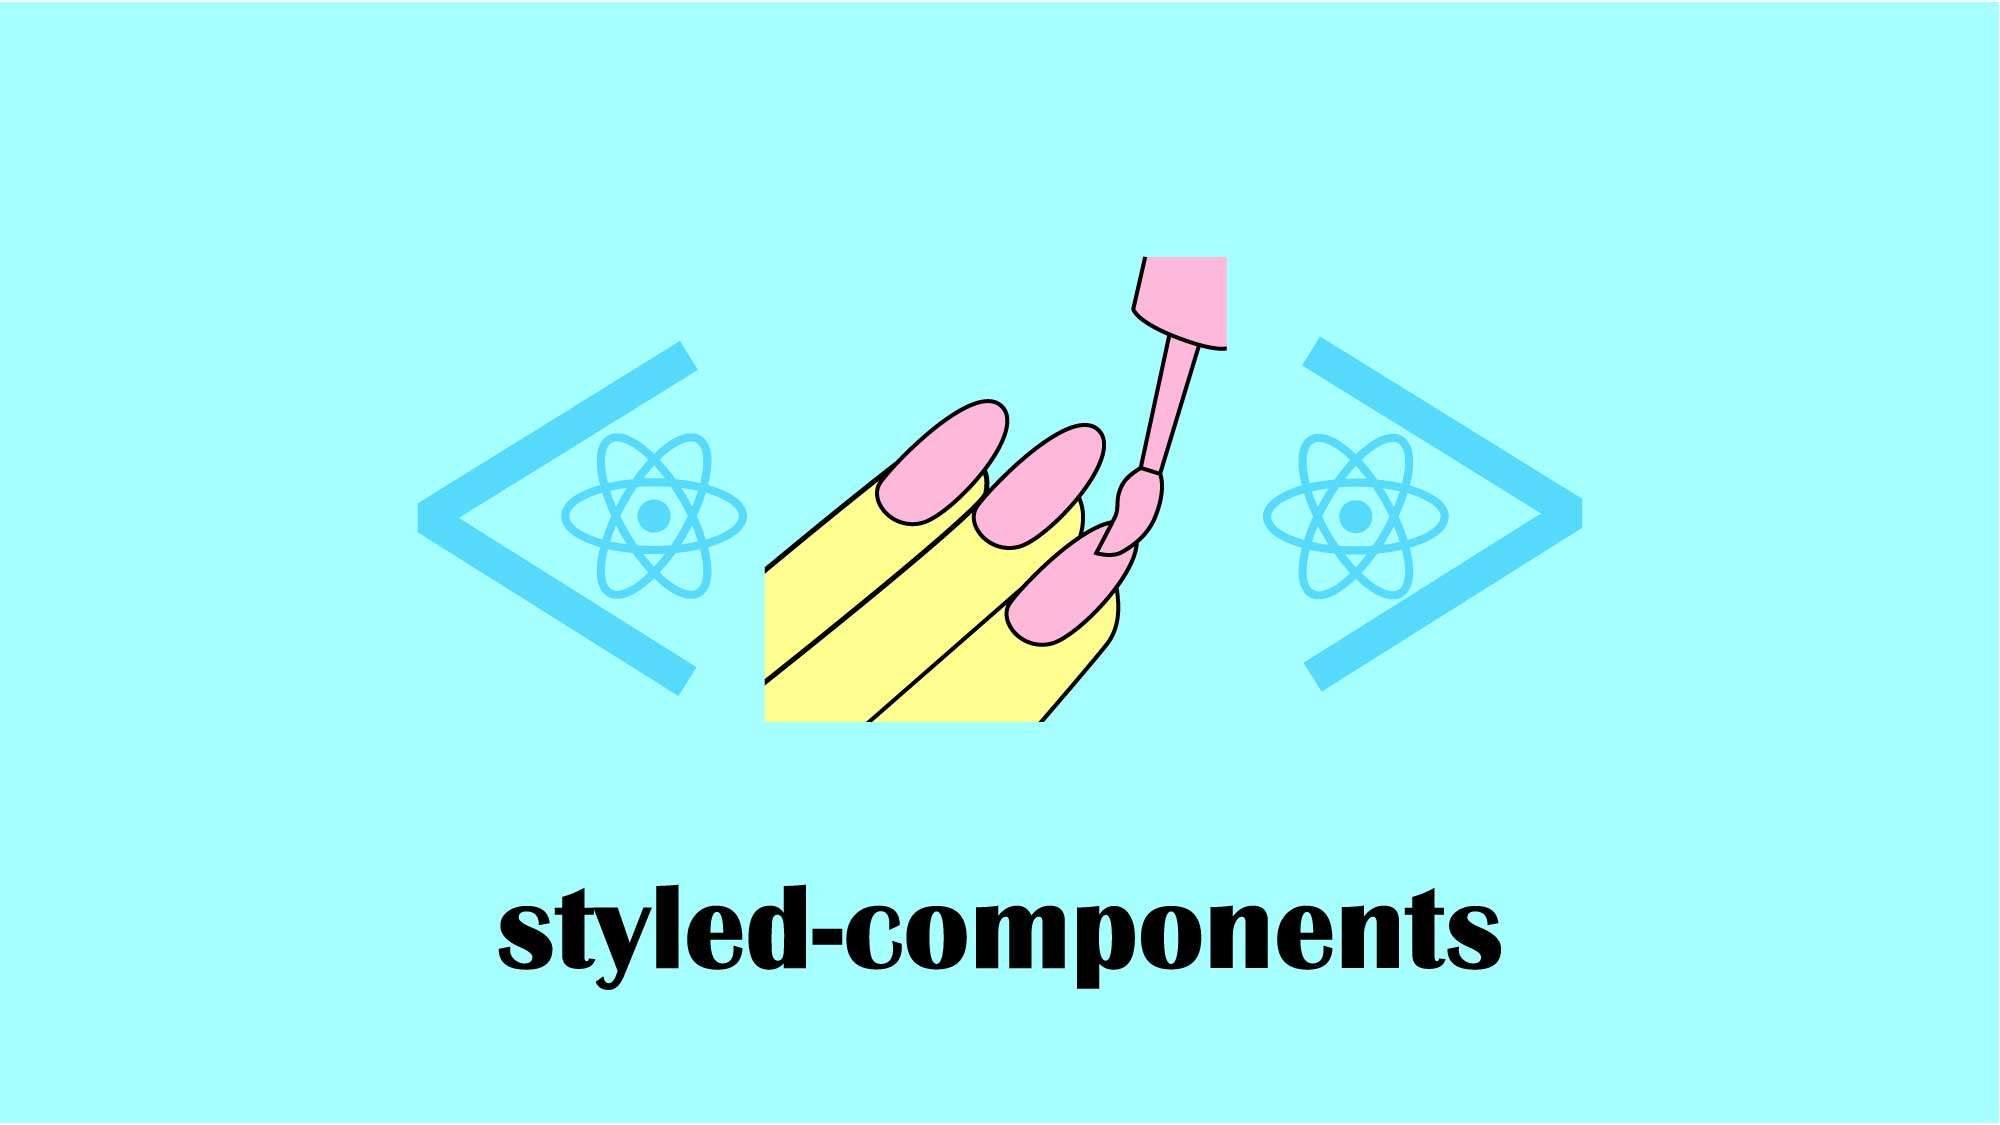 TypeScriptでstyled-components〜基礎から発展的な使い方〜